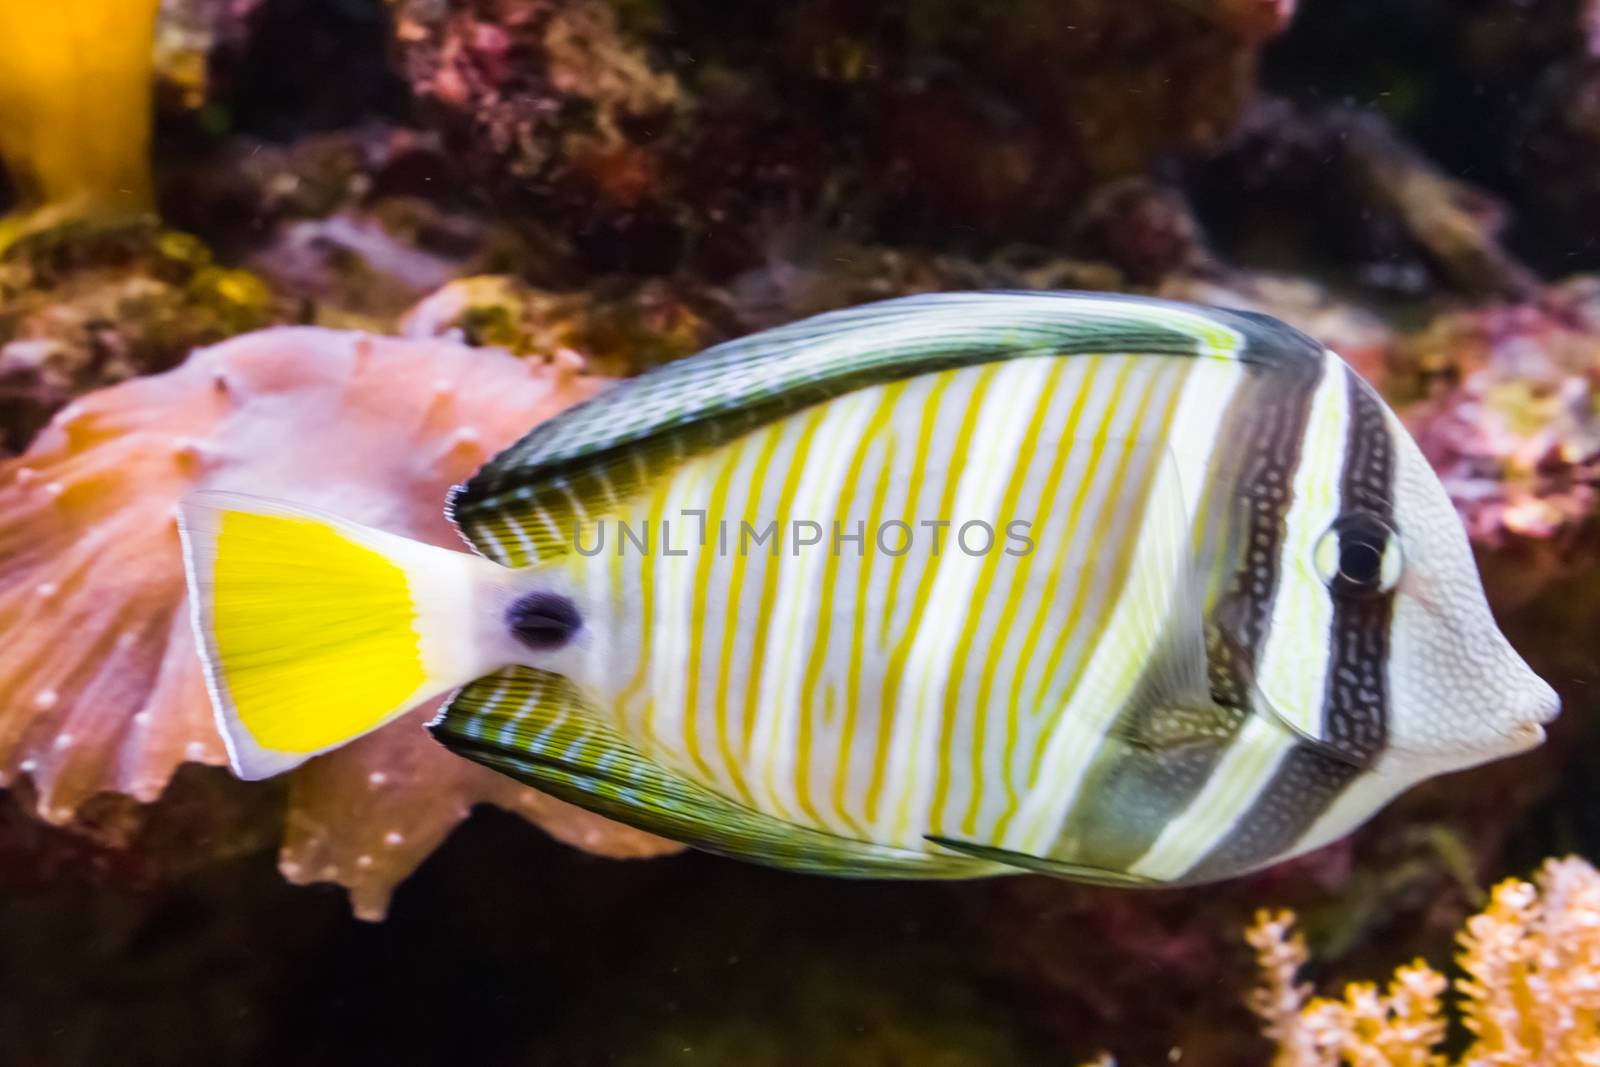 Sailfin tang fish in closeup, a tropical and colorful aquarium pet from the indian ocean